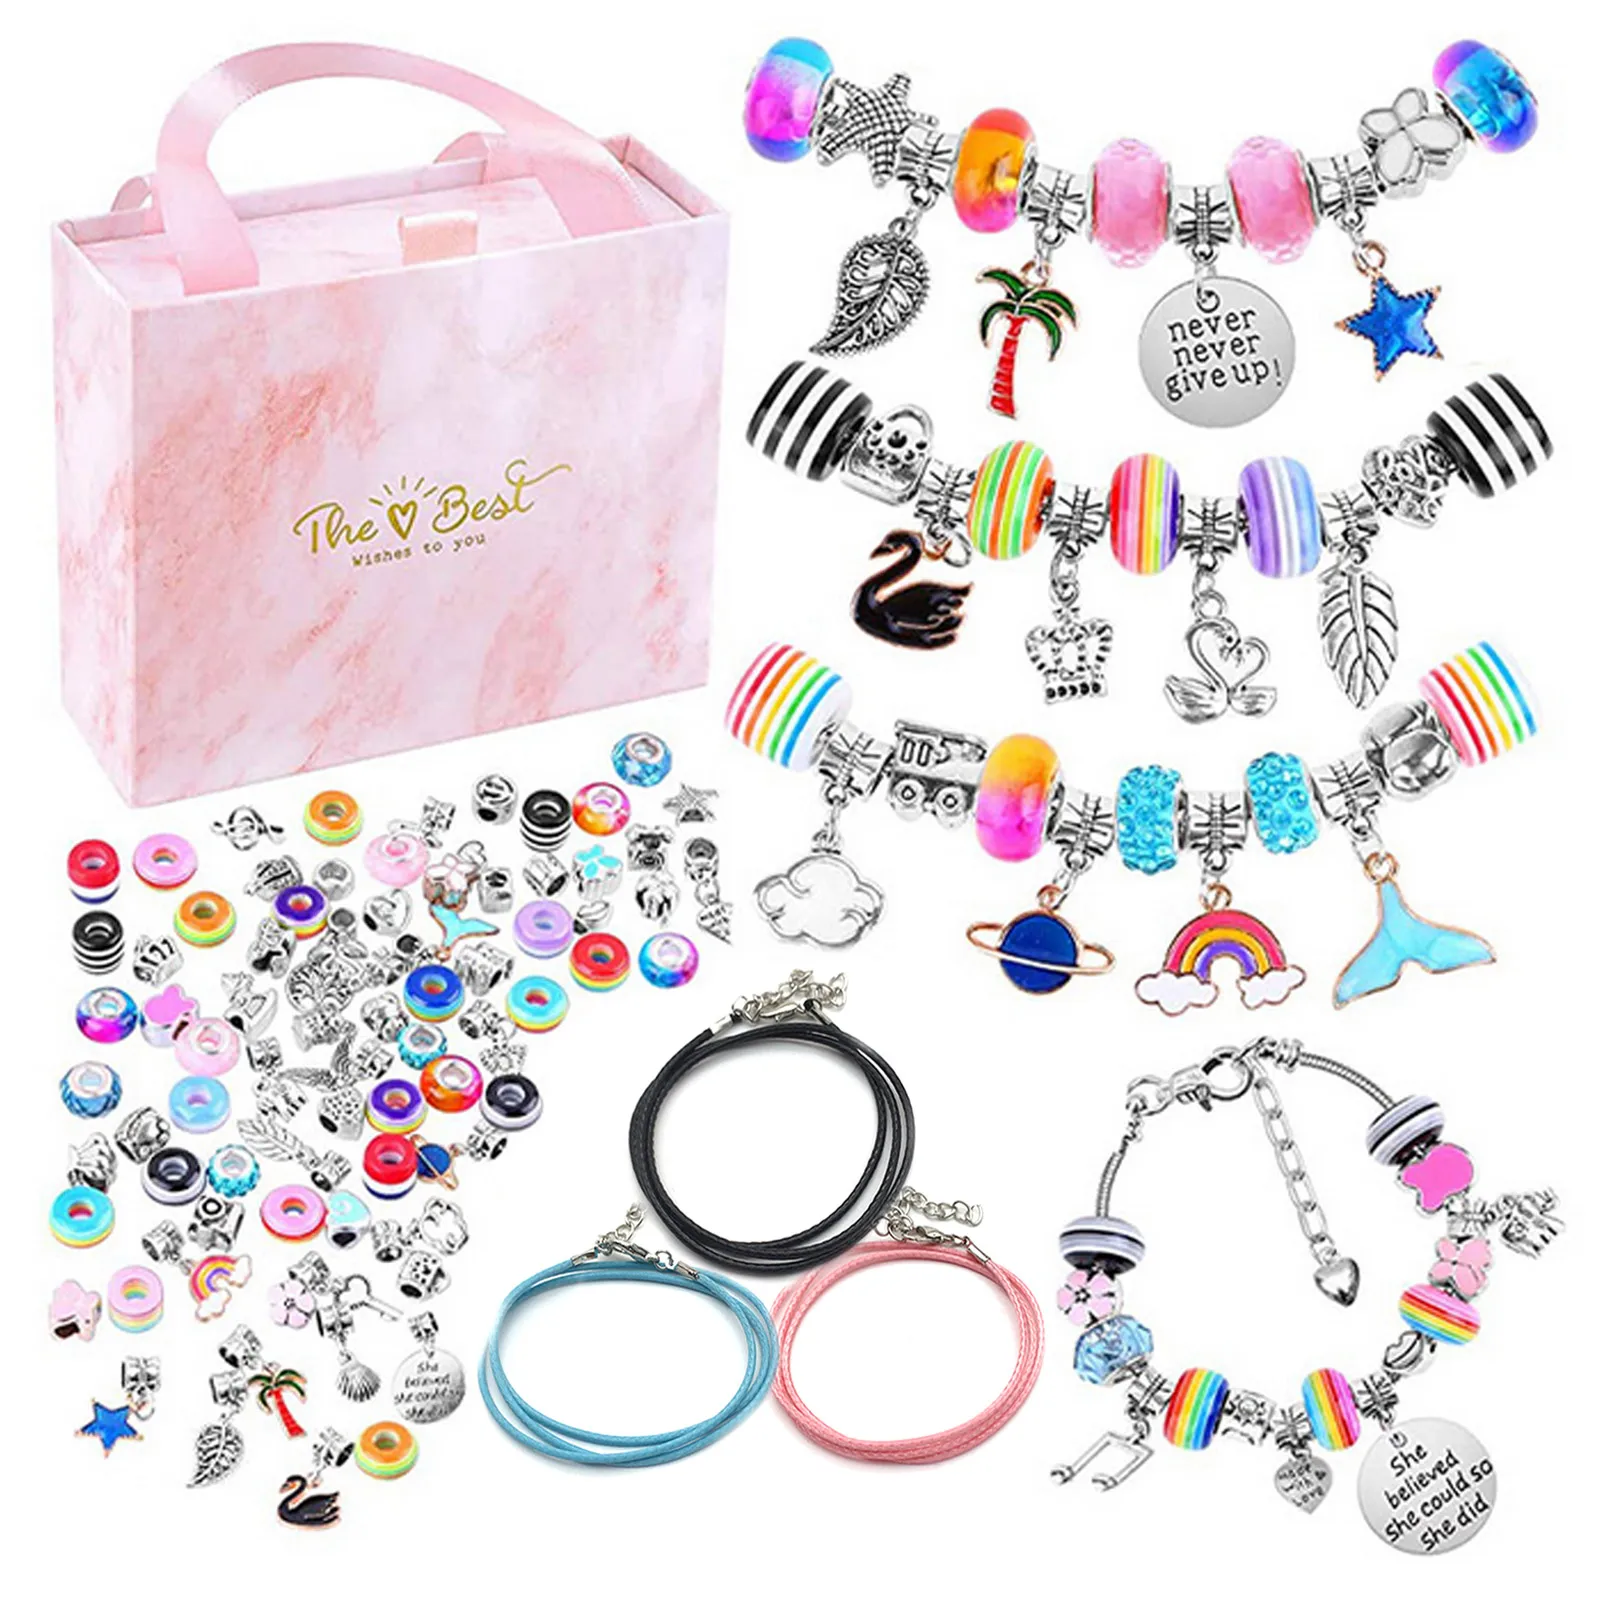  justBe Charm Bracelet Making Kit DIY Craft Jewelry Gift Set for  Kids Girls Teens